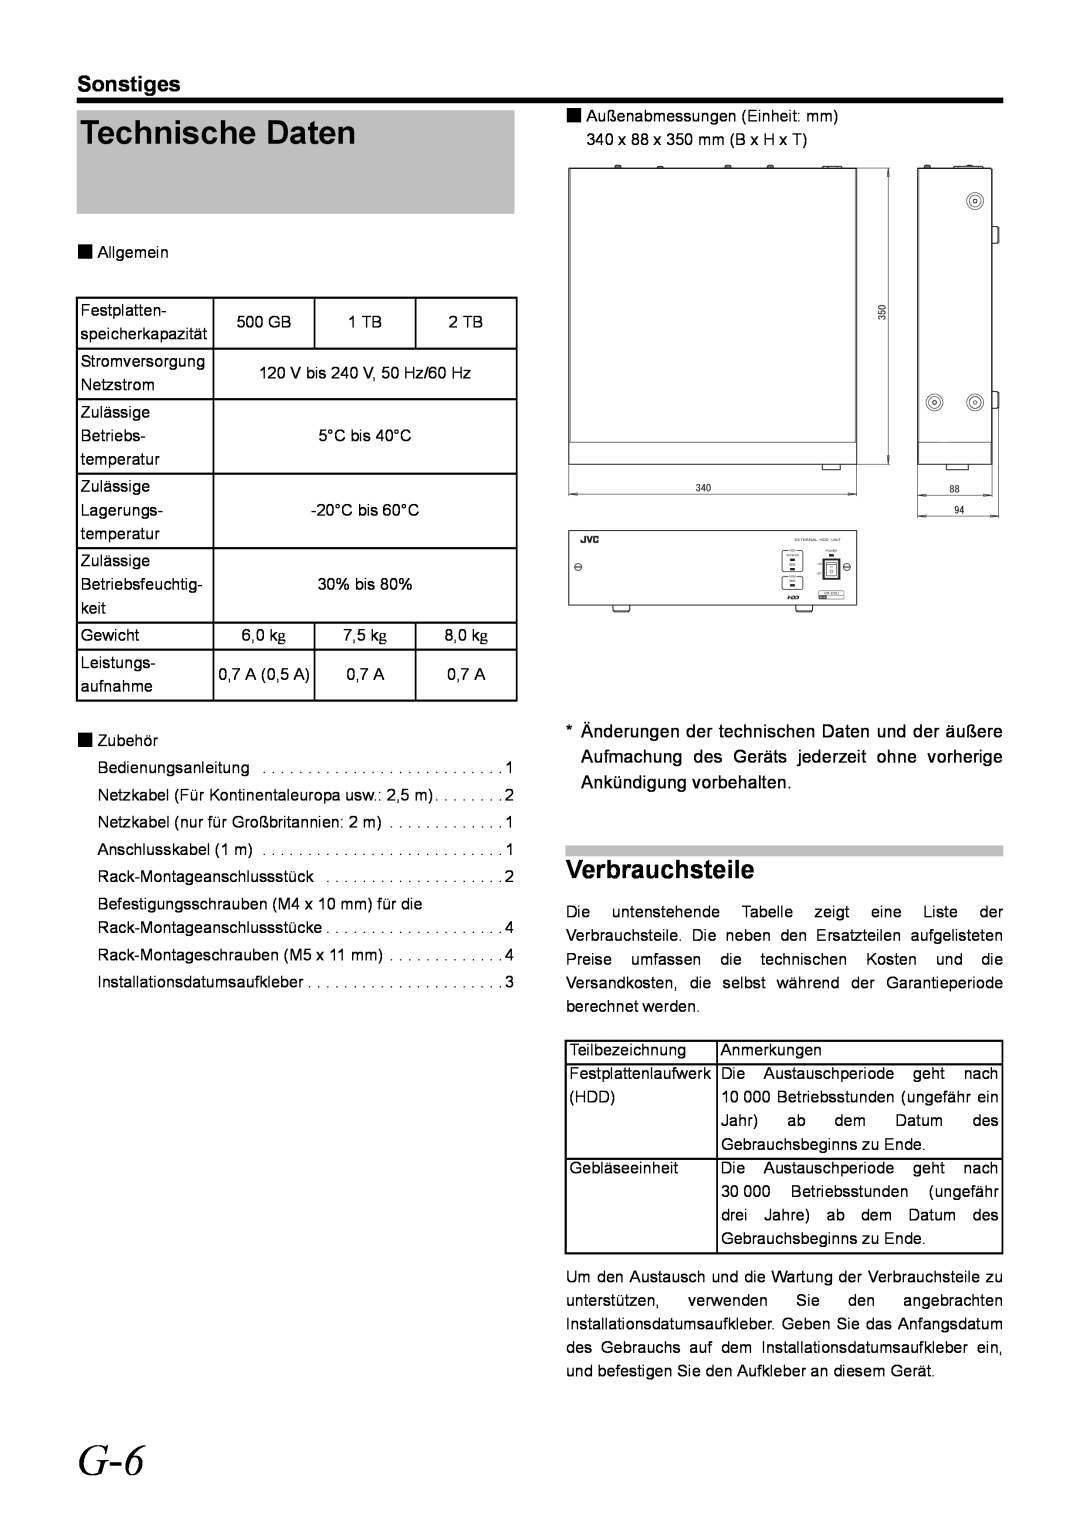 JVC VR-D0U manual Technische Daten, Verbrauchsteile, Sonstiges 